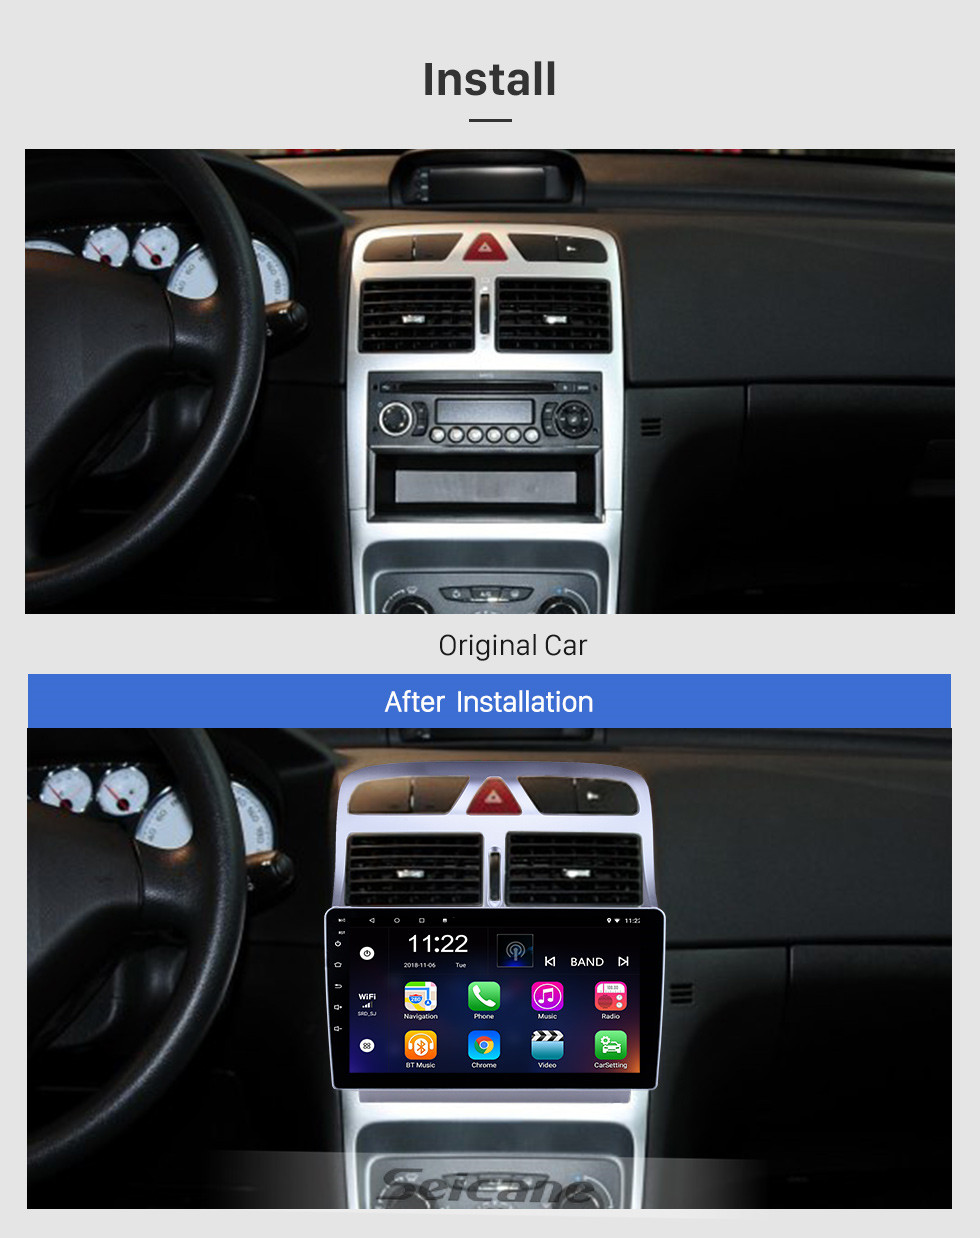 Autoradio GPS Android 10.0 Peugeot 307, autoradio-boutique